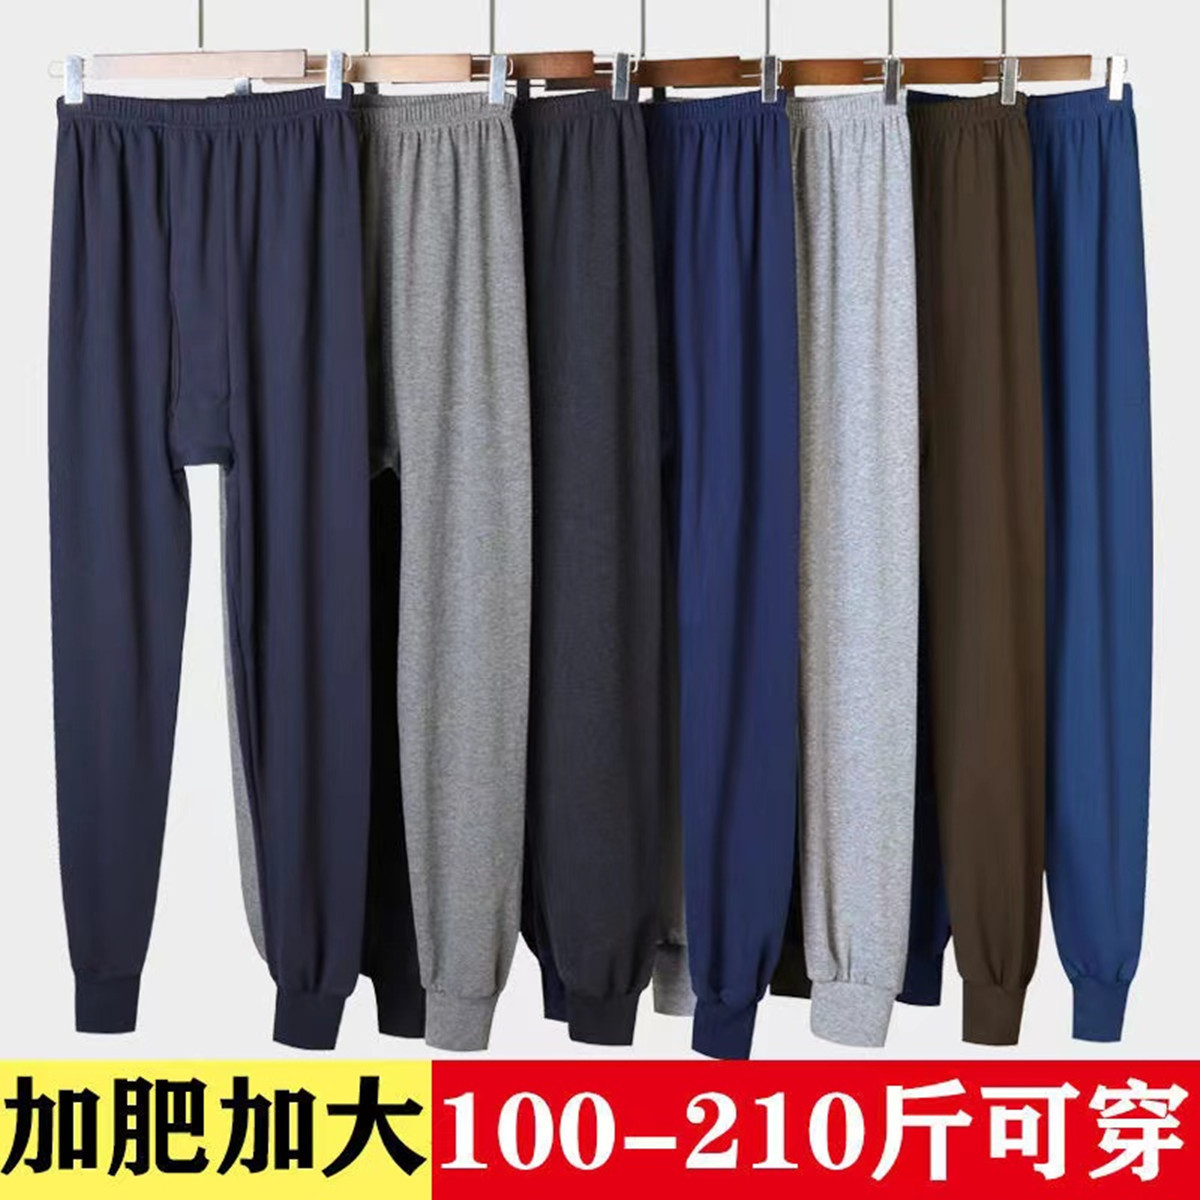 man Long johns Line pants High elastic Leggings Pants Plush Warm pants Line pants Autumn and winter new pattern wholesale